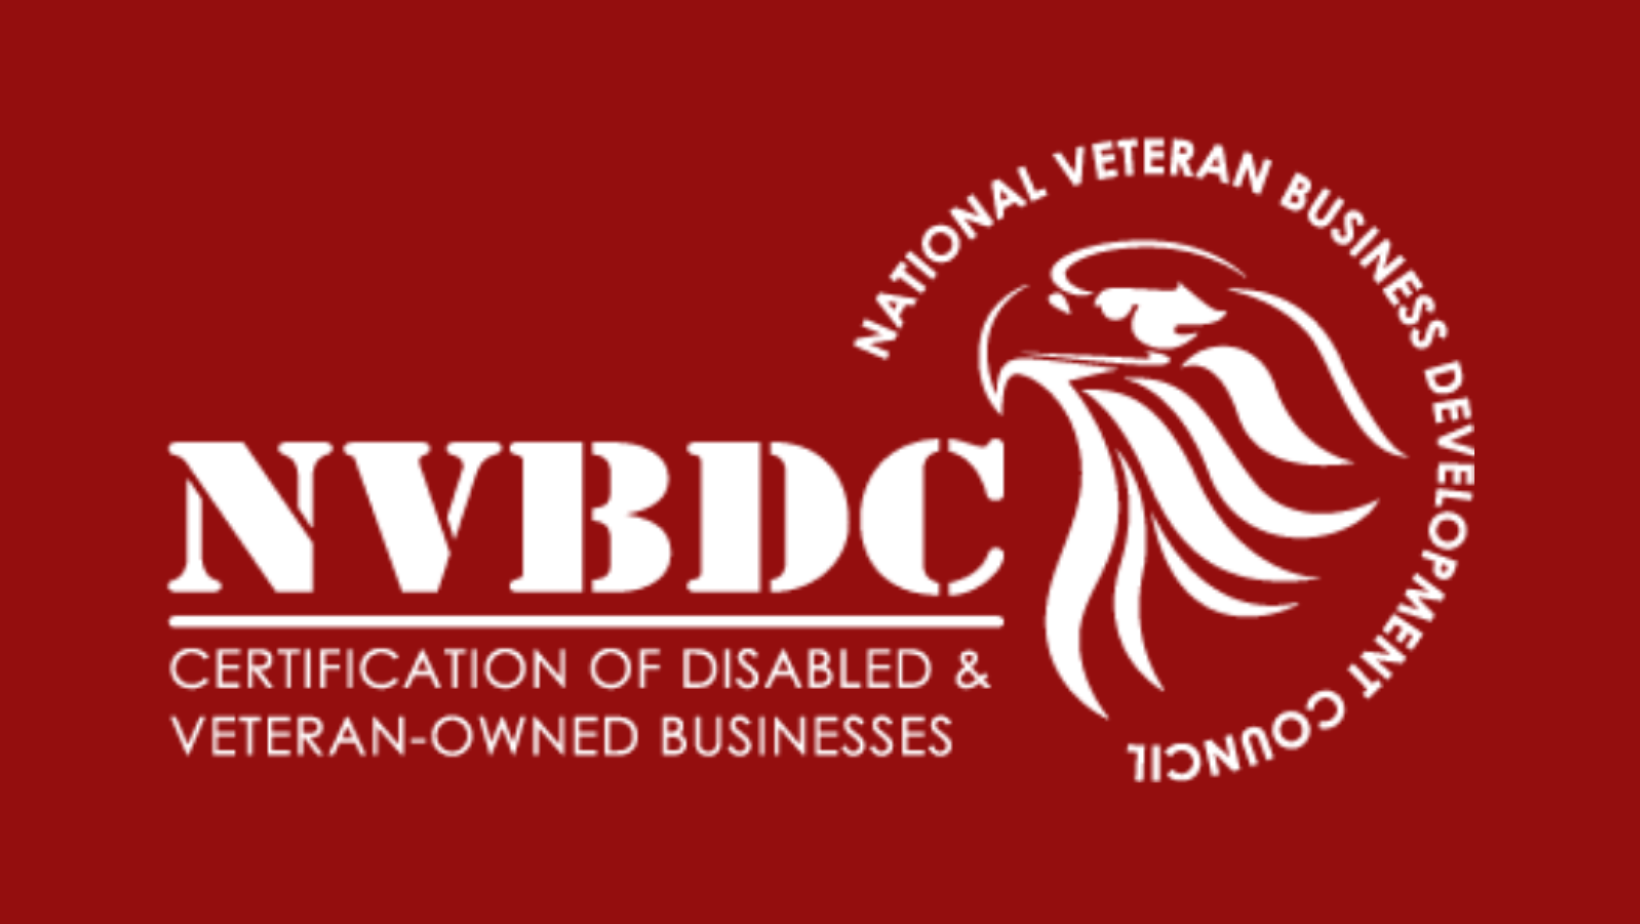 A logo for the national veteran business development council